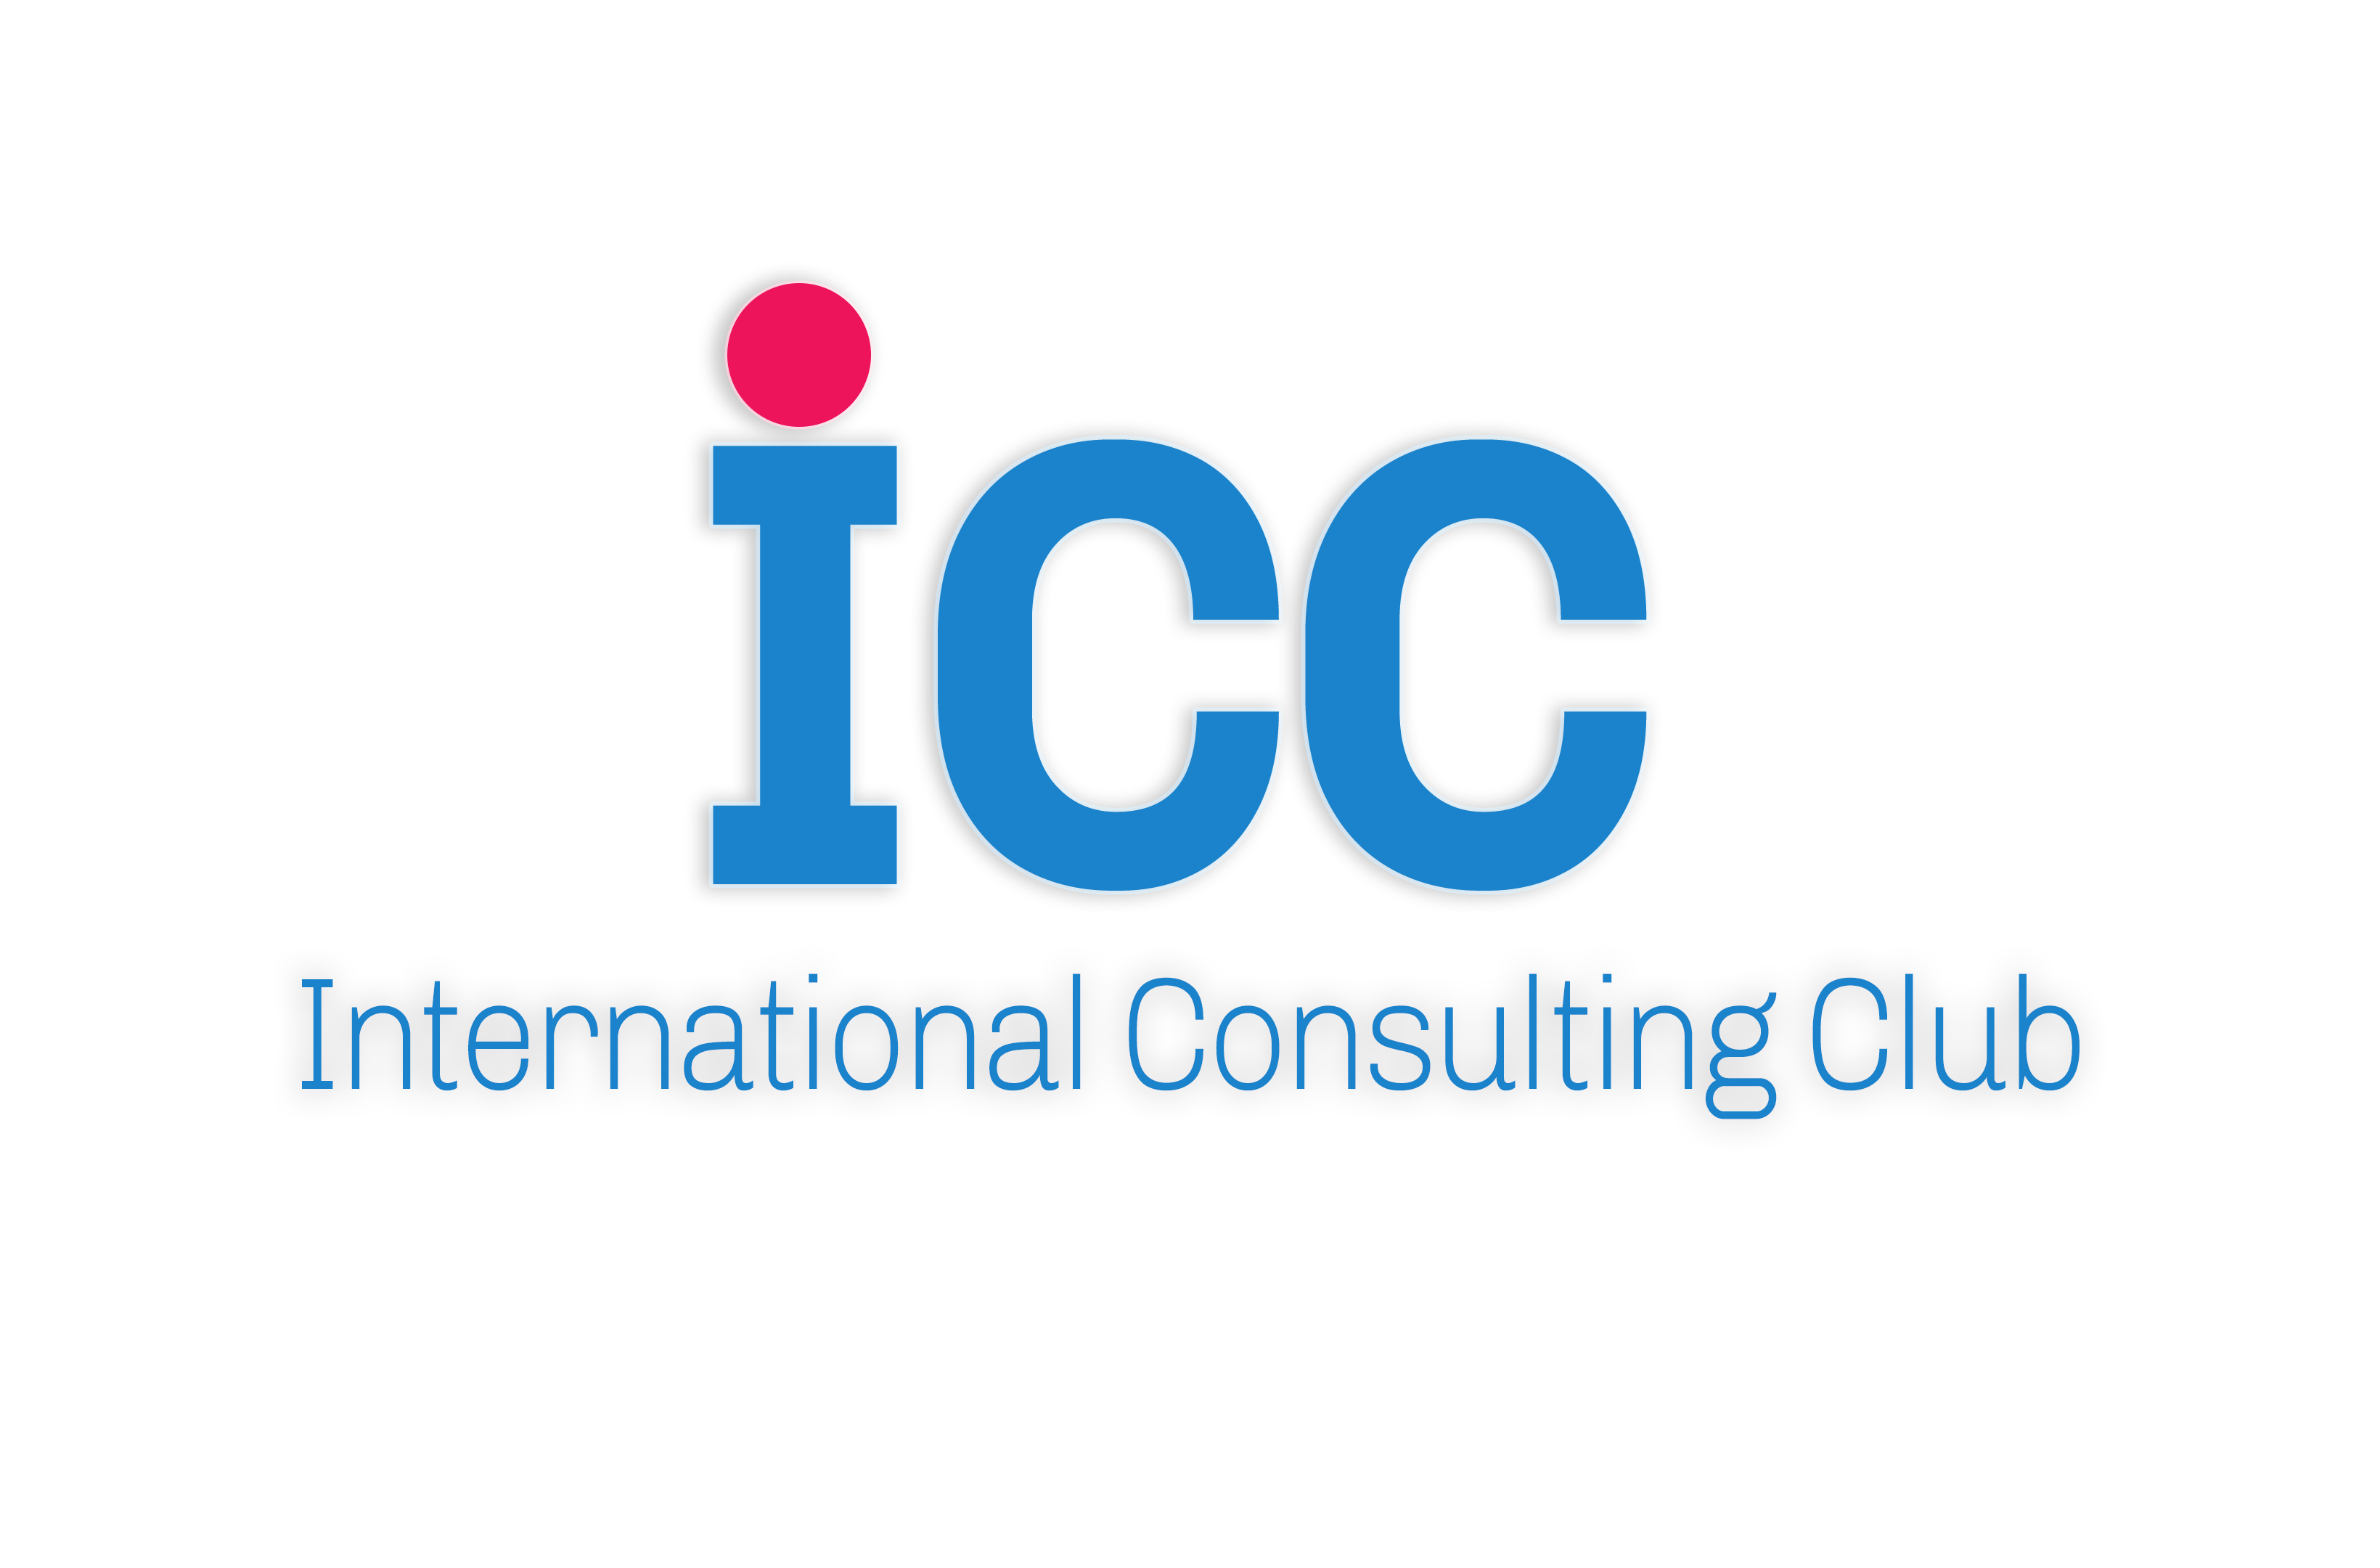 LOGO INTERNATIONAL CONSULTING CLUB